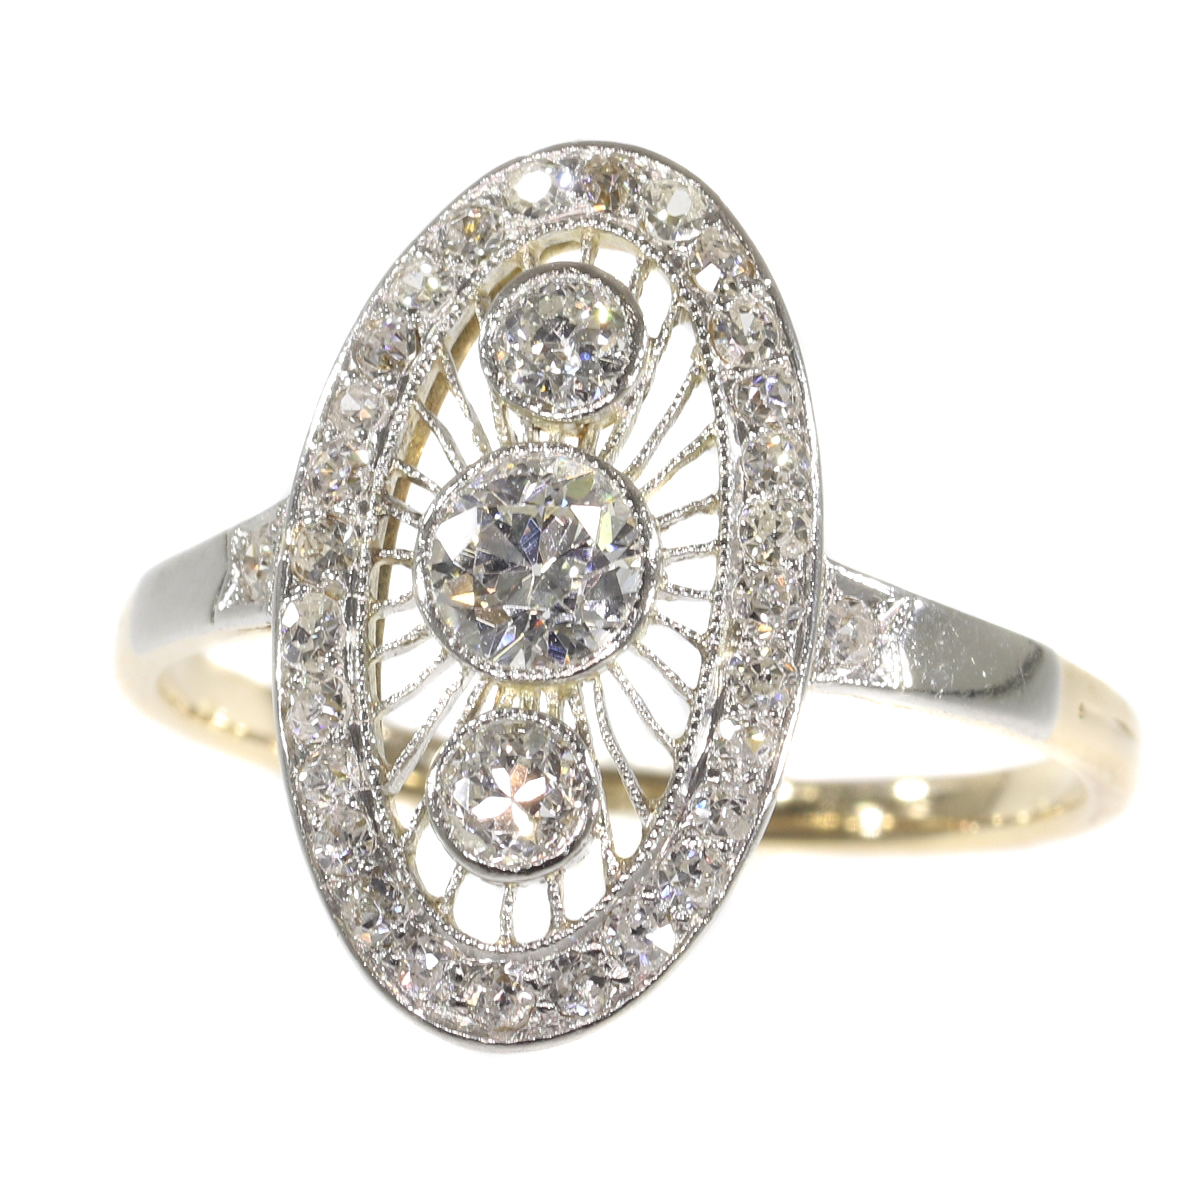 Vintage Art Deco Edwardian diamond engagement ring